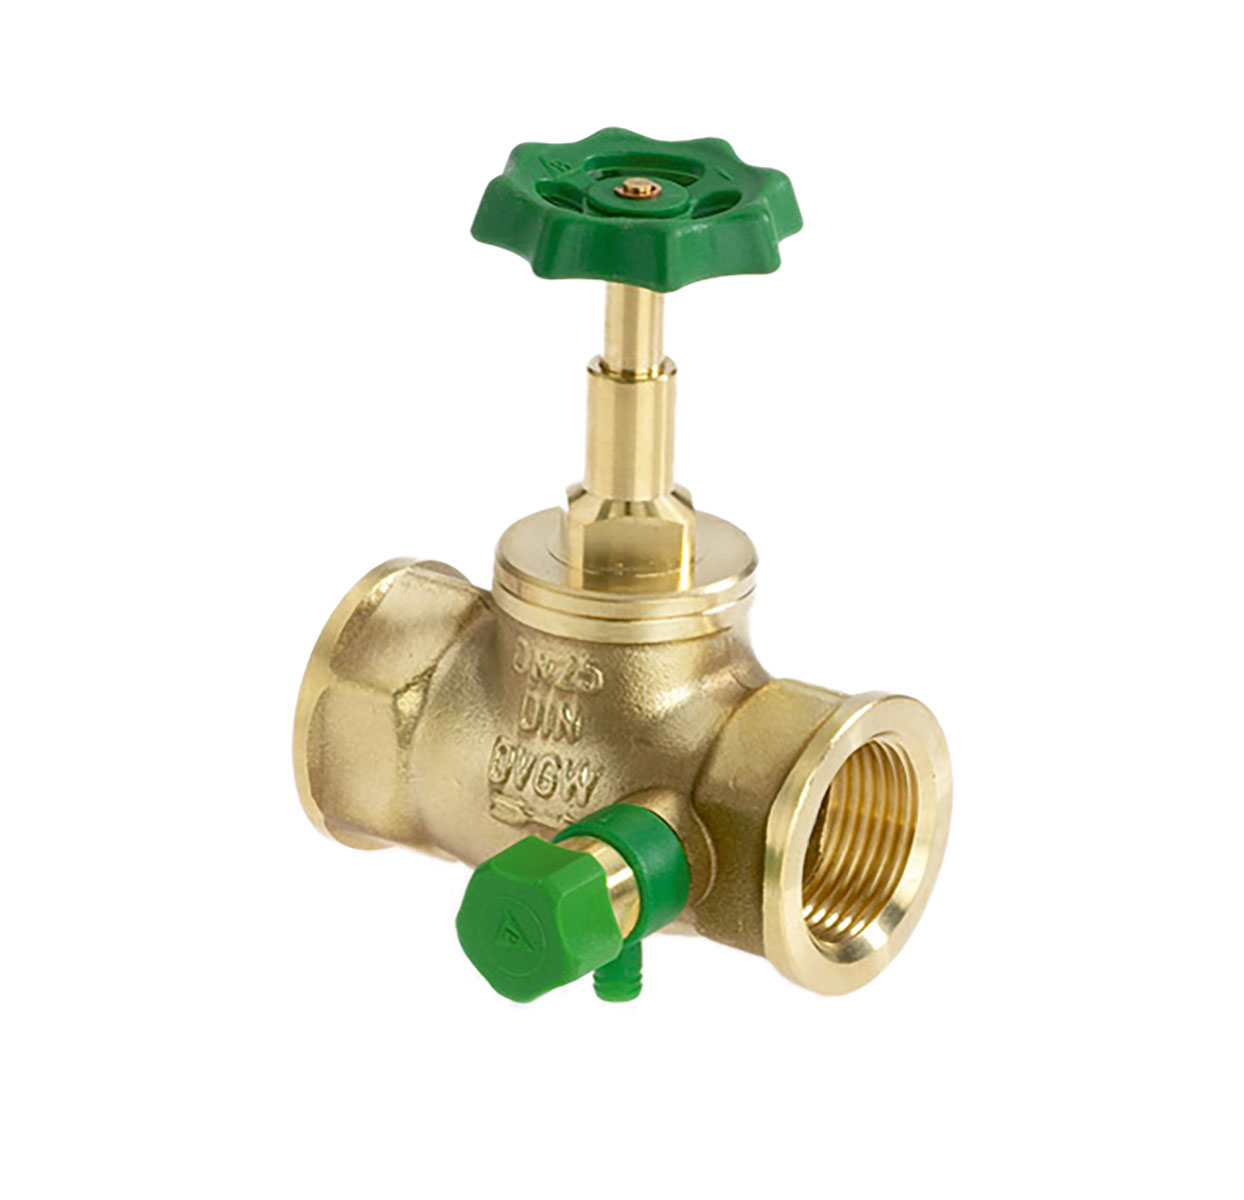 1304100 - CR-Brass Globe valve with drain valve, rising